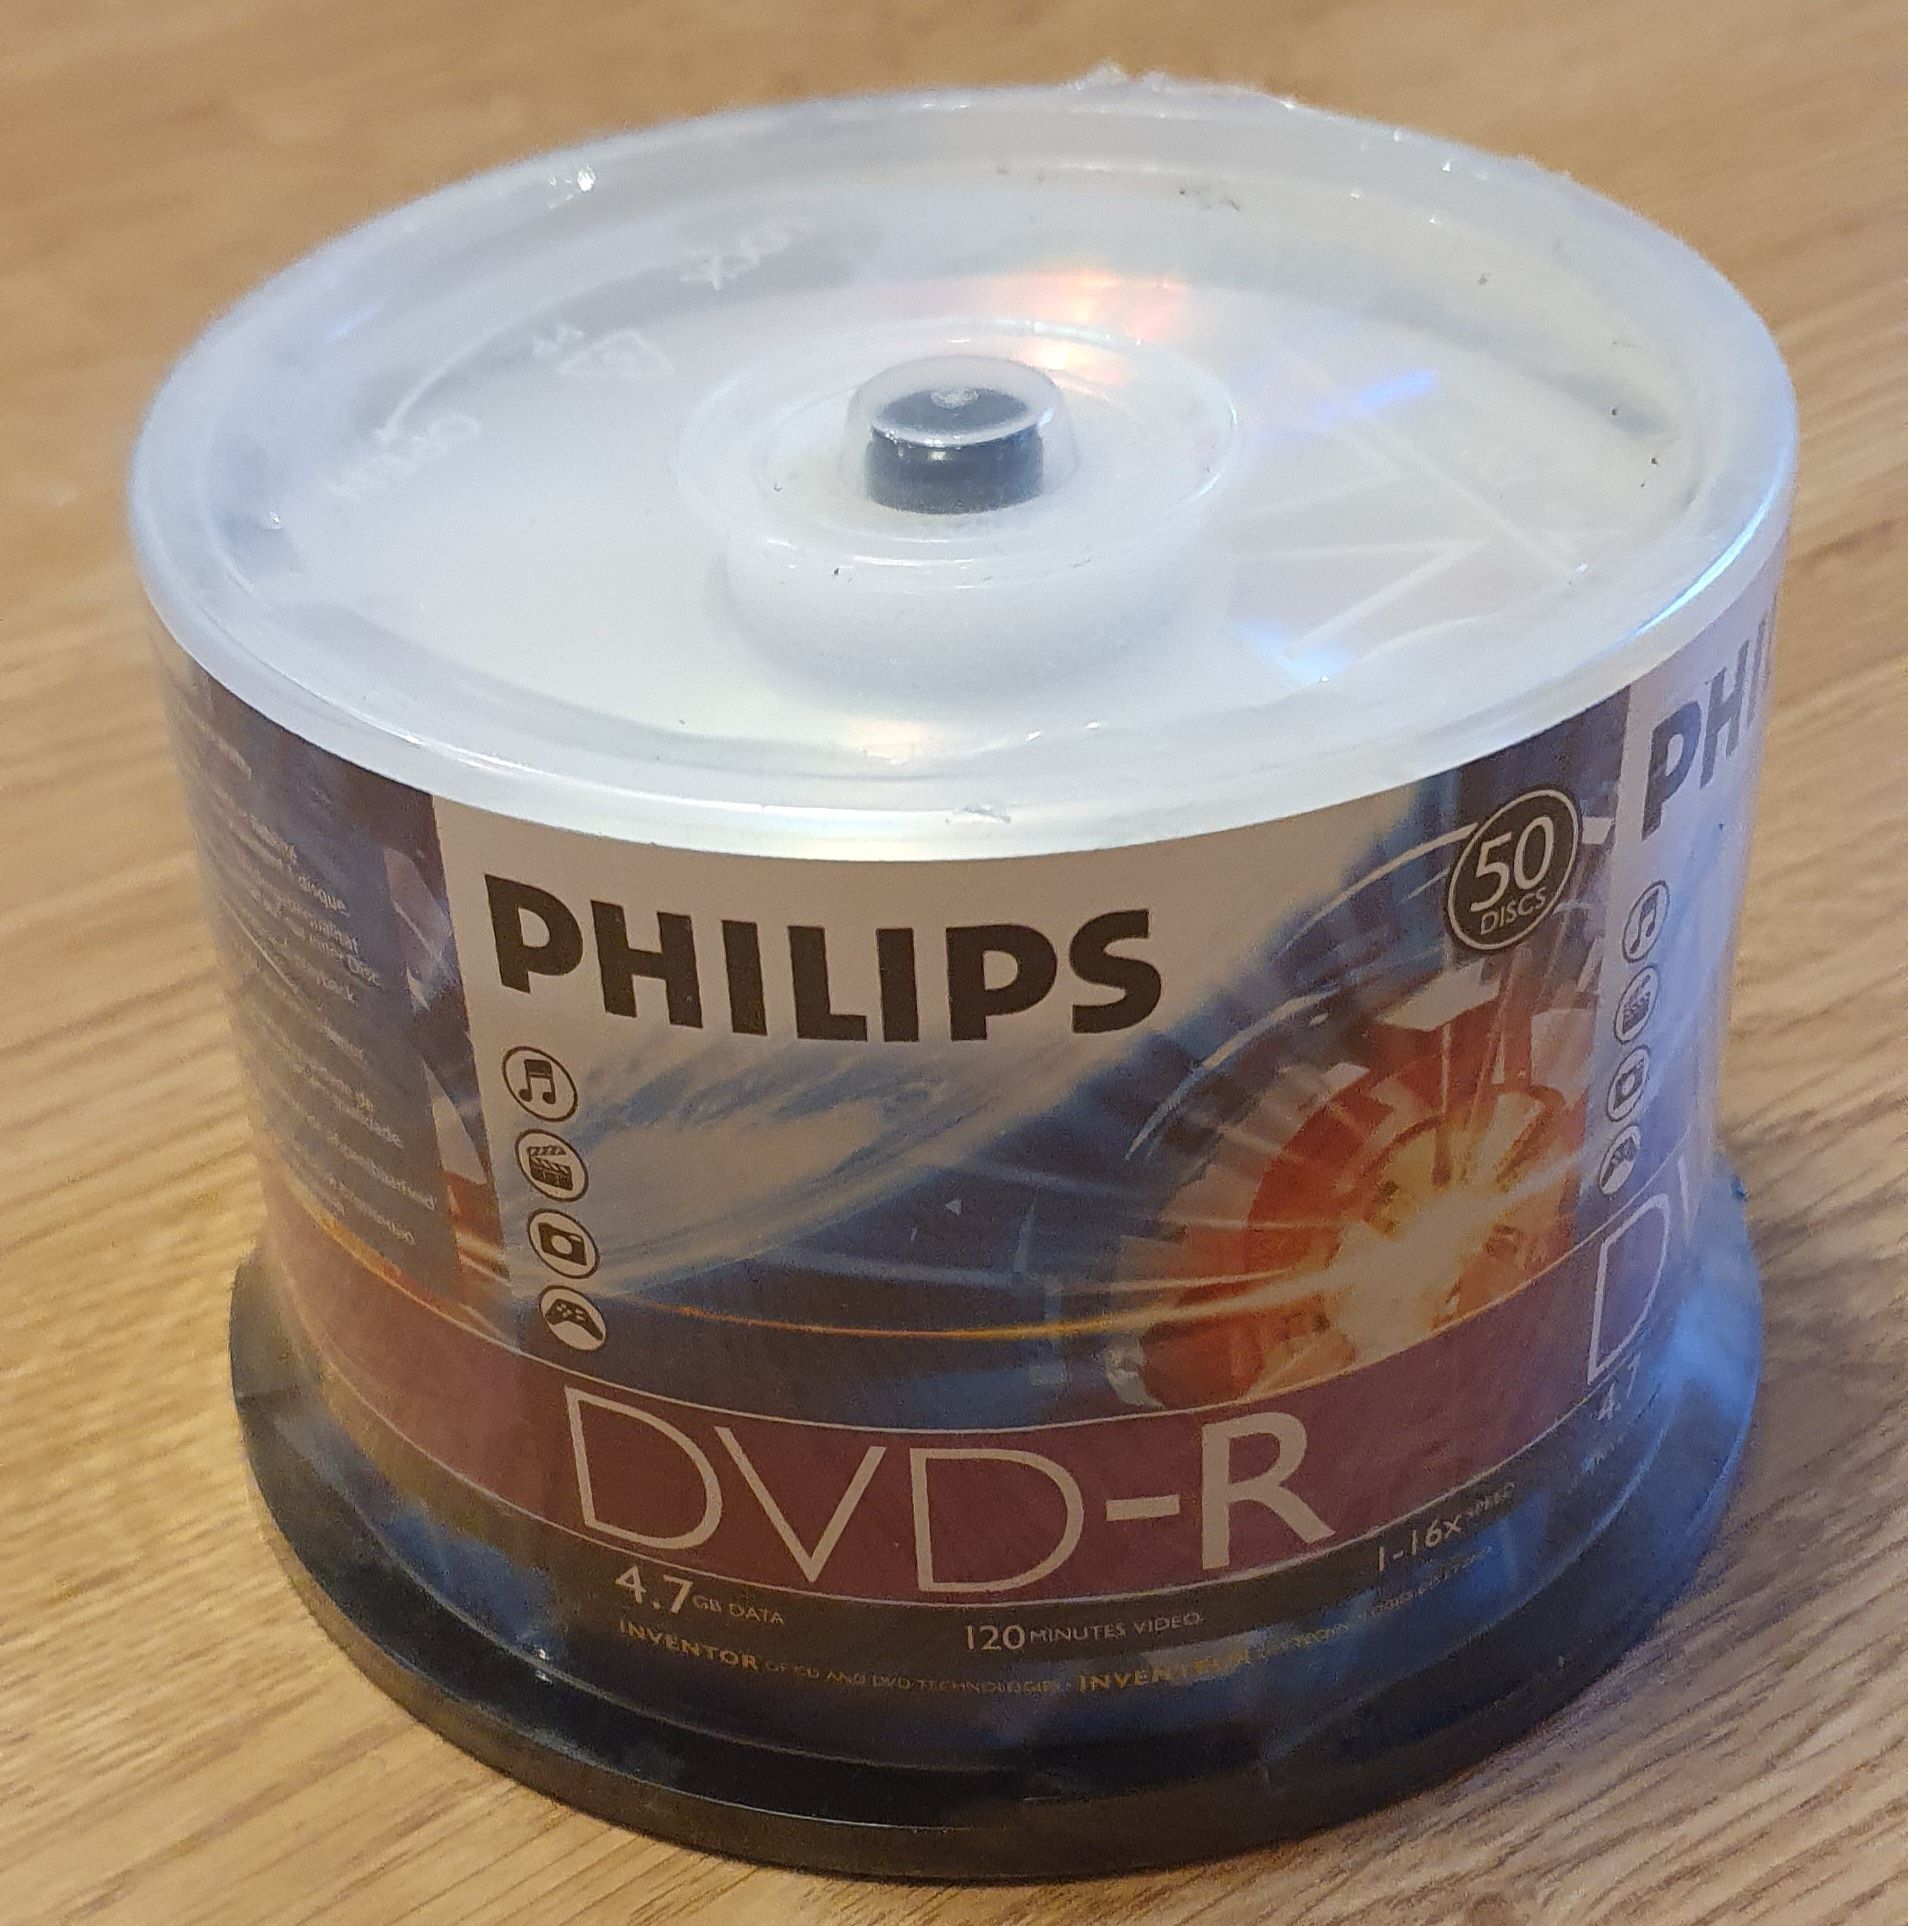 Philips dvd-r. 4,7 gb data